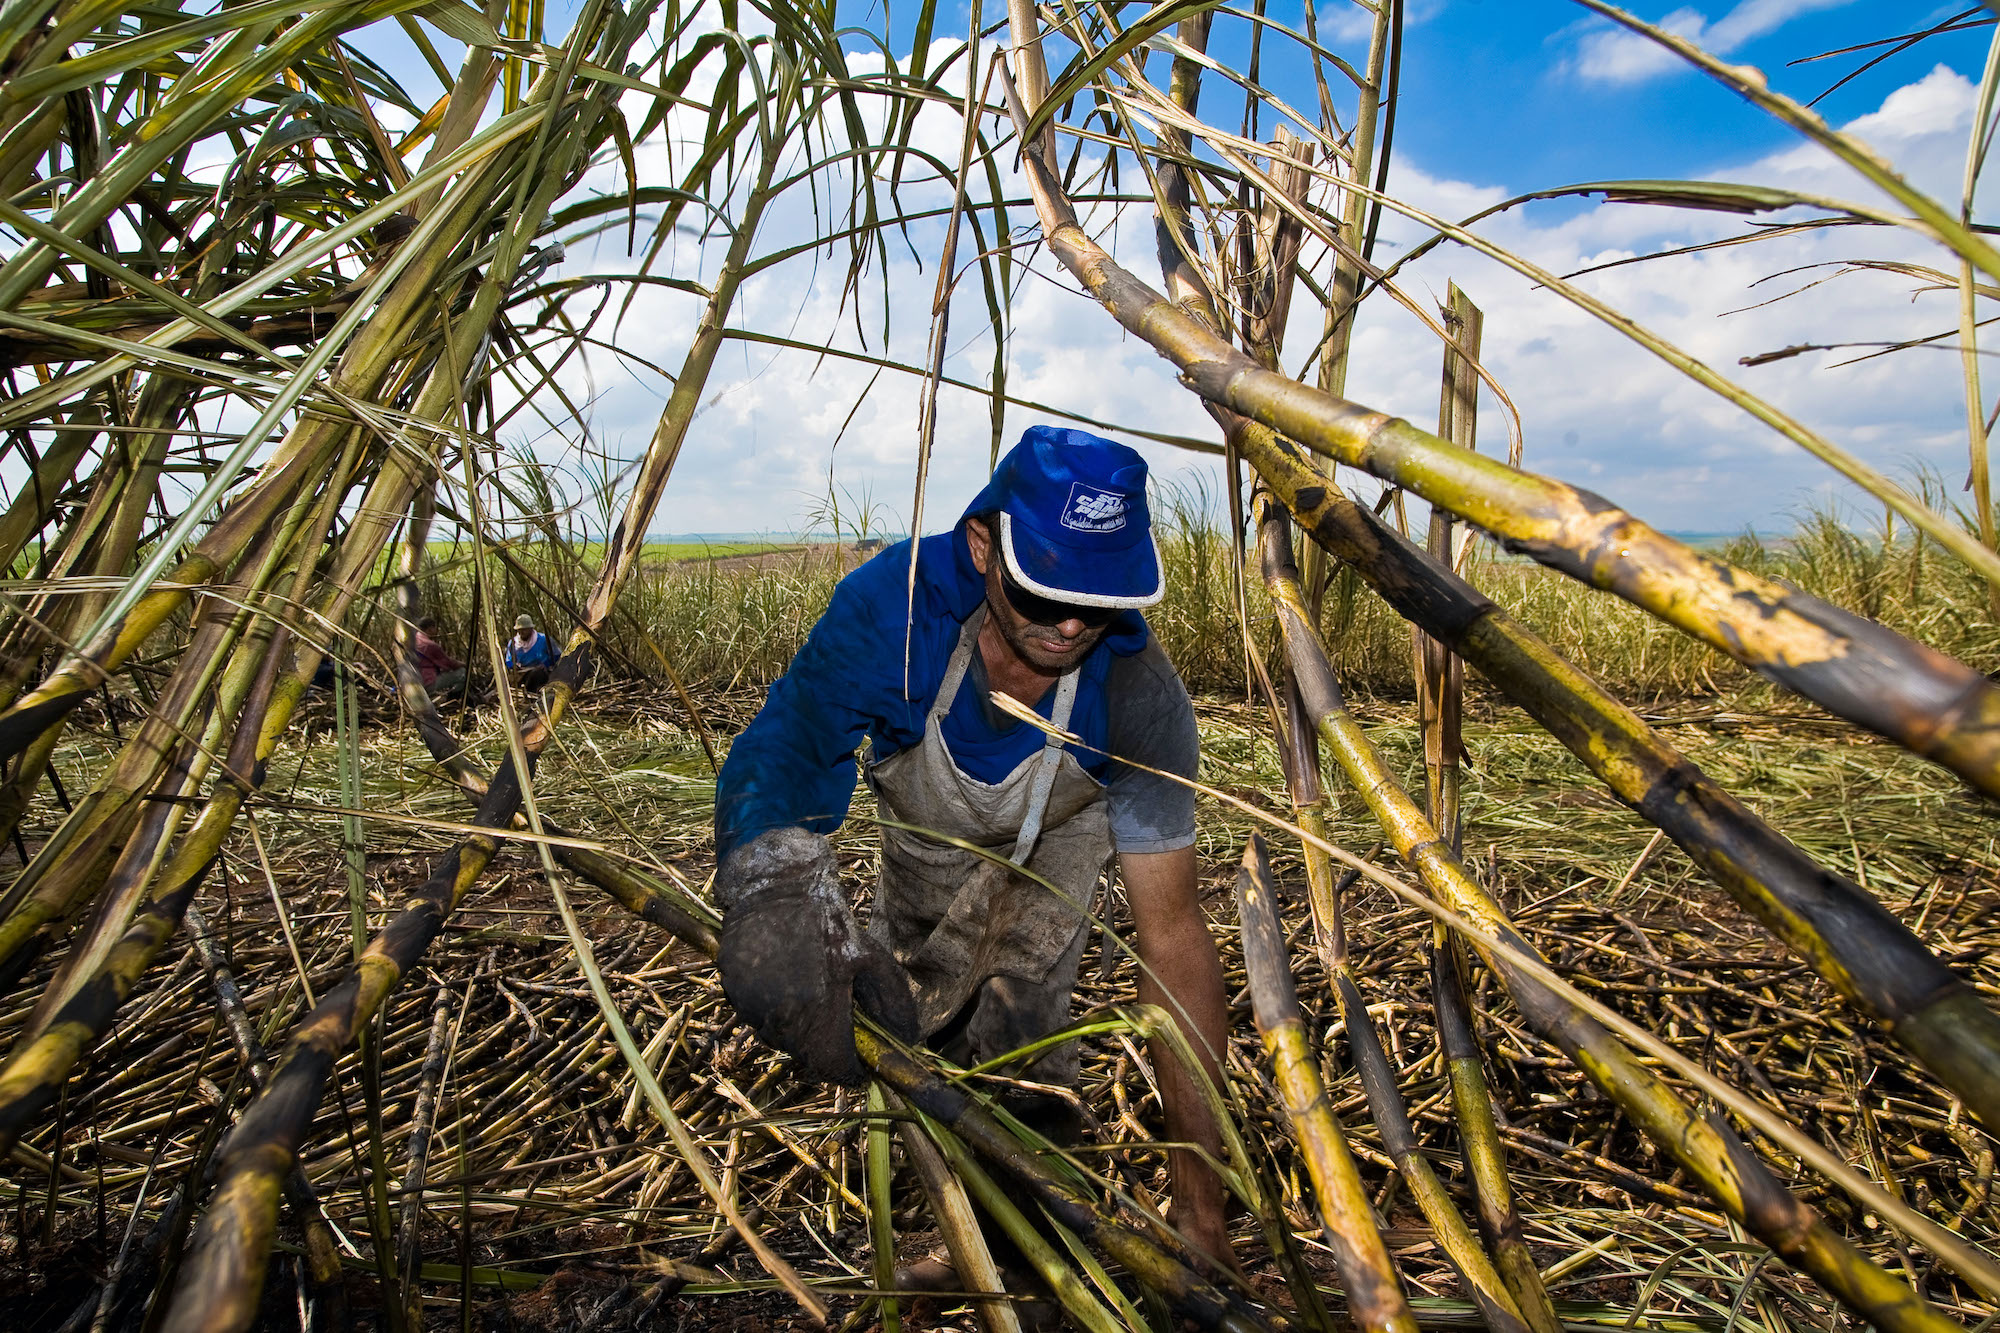 Sugarcane cutters near Sao Paulo State Brazil, harvesting sugar cane for ethanol biofuel